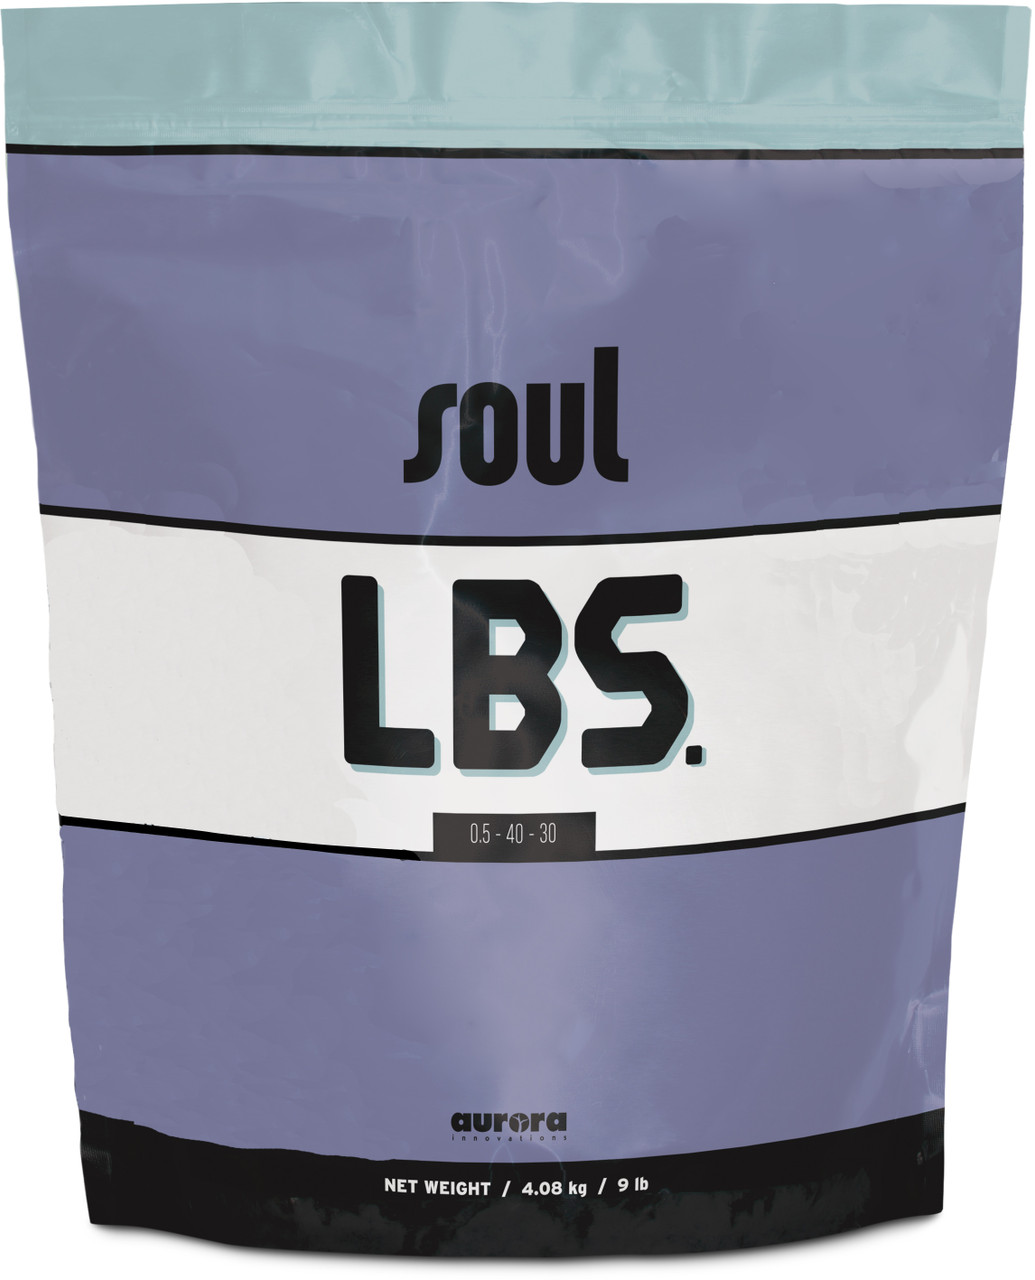 Soul LBS. 9 lb